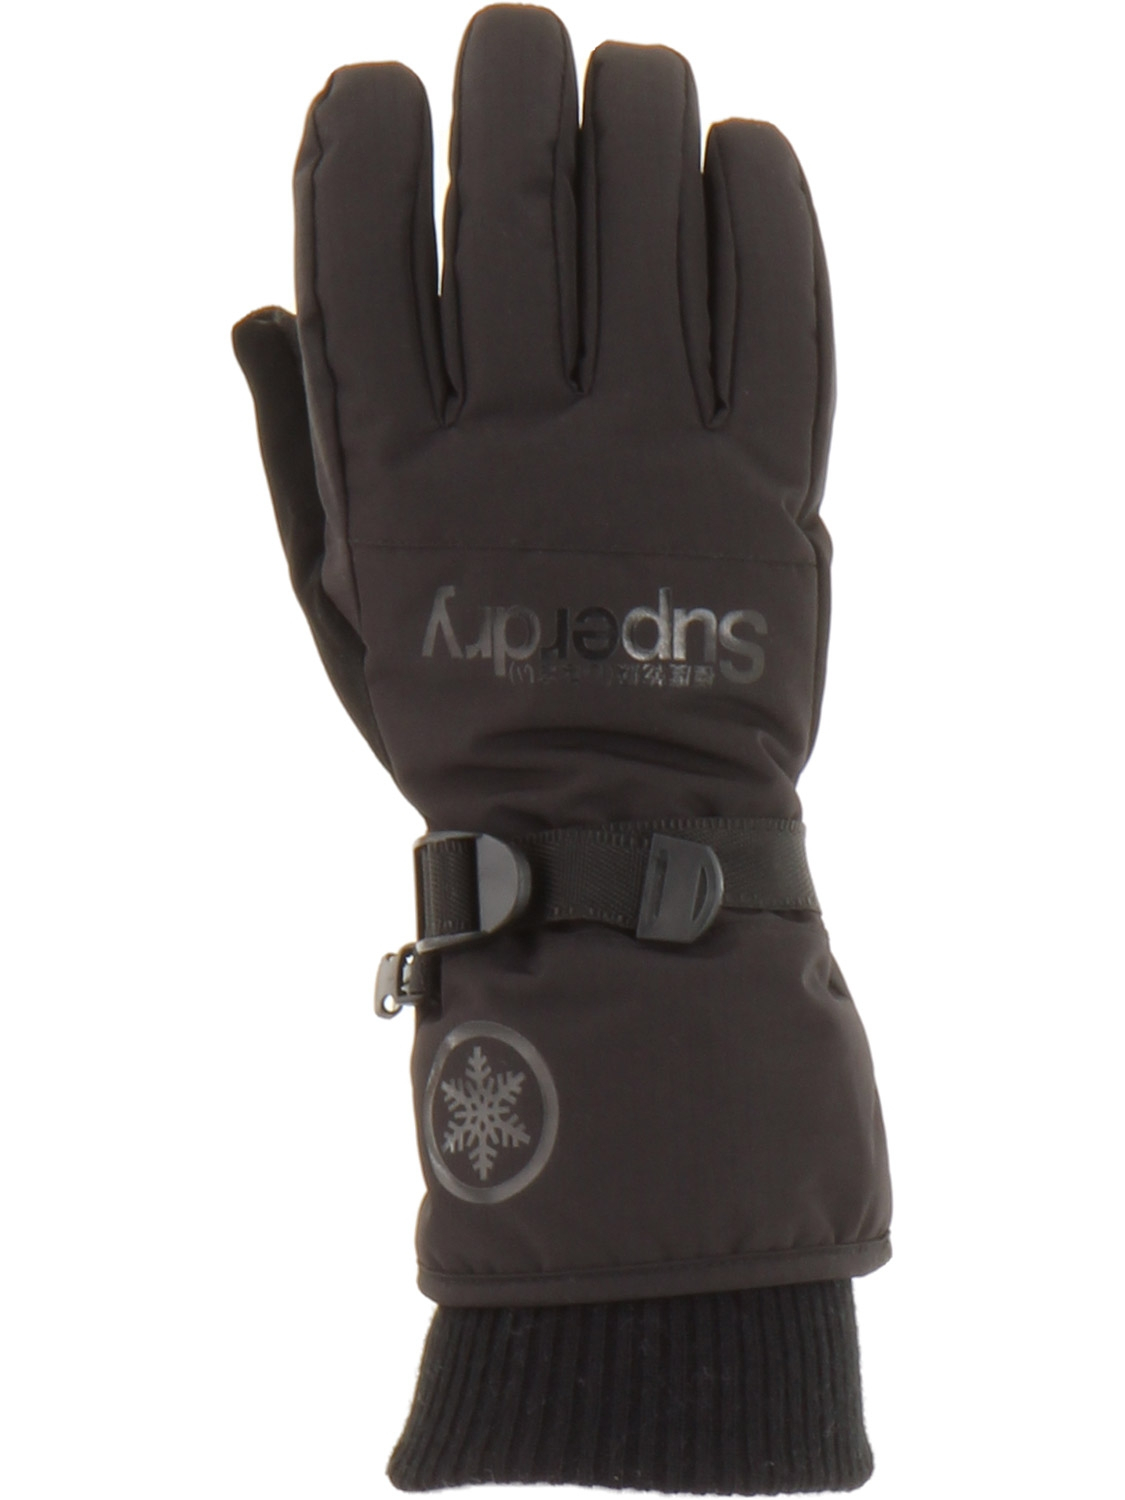 Superdry Mens Ultimate Snow Service Glove Black - Size: S-M